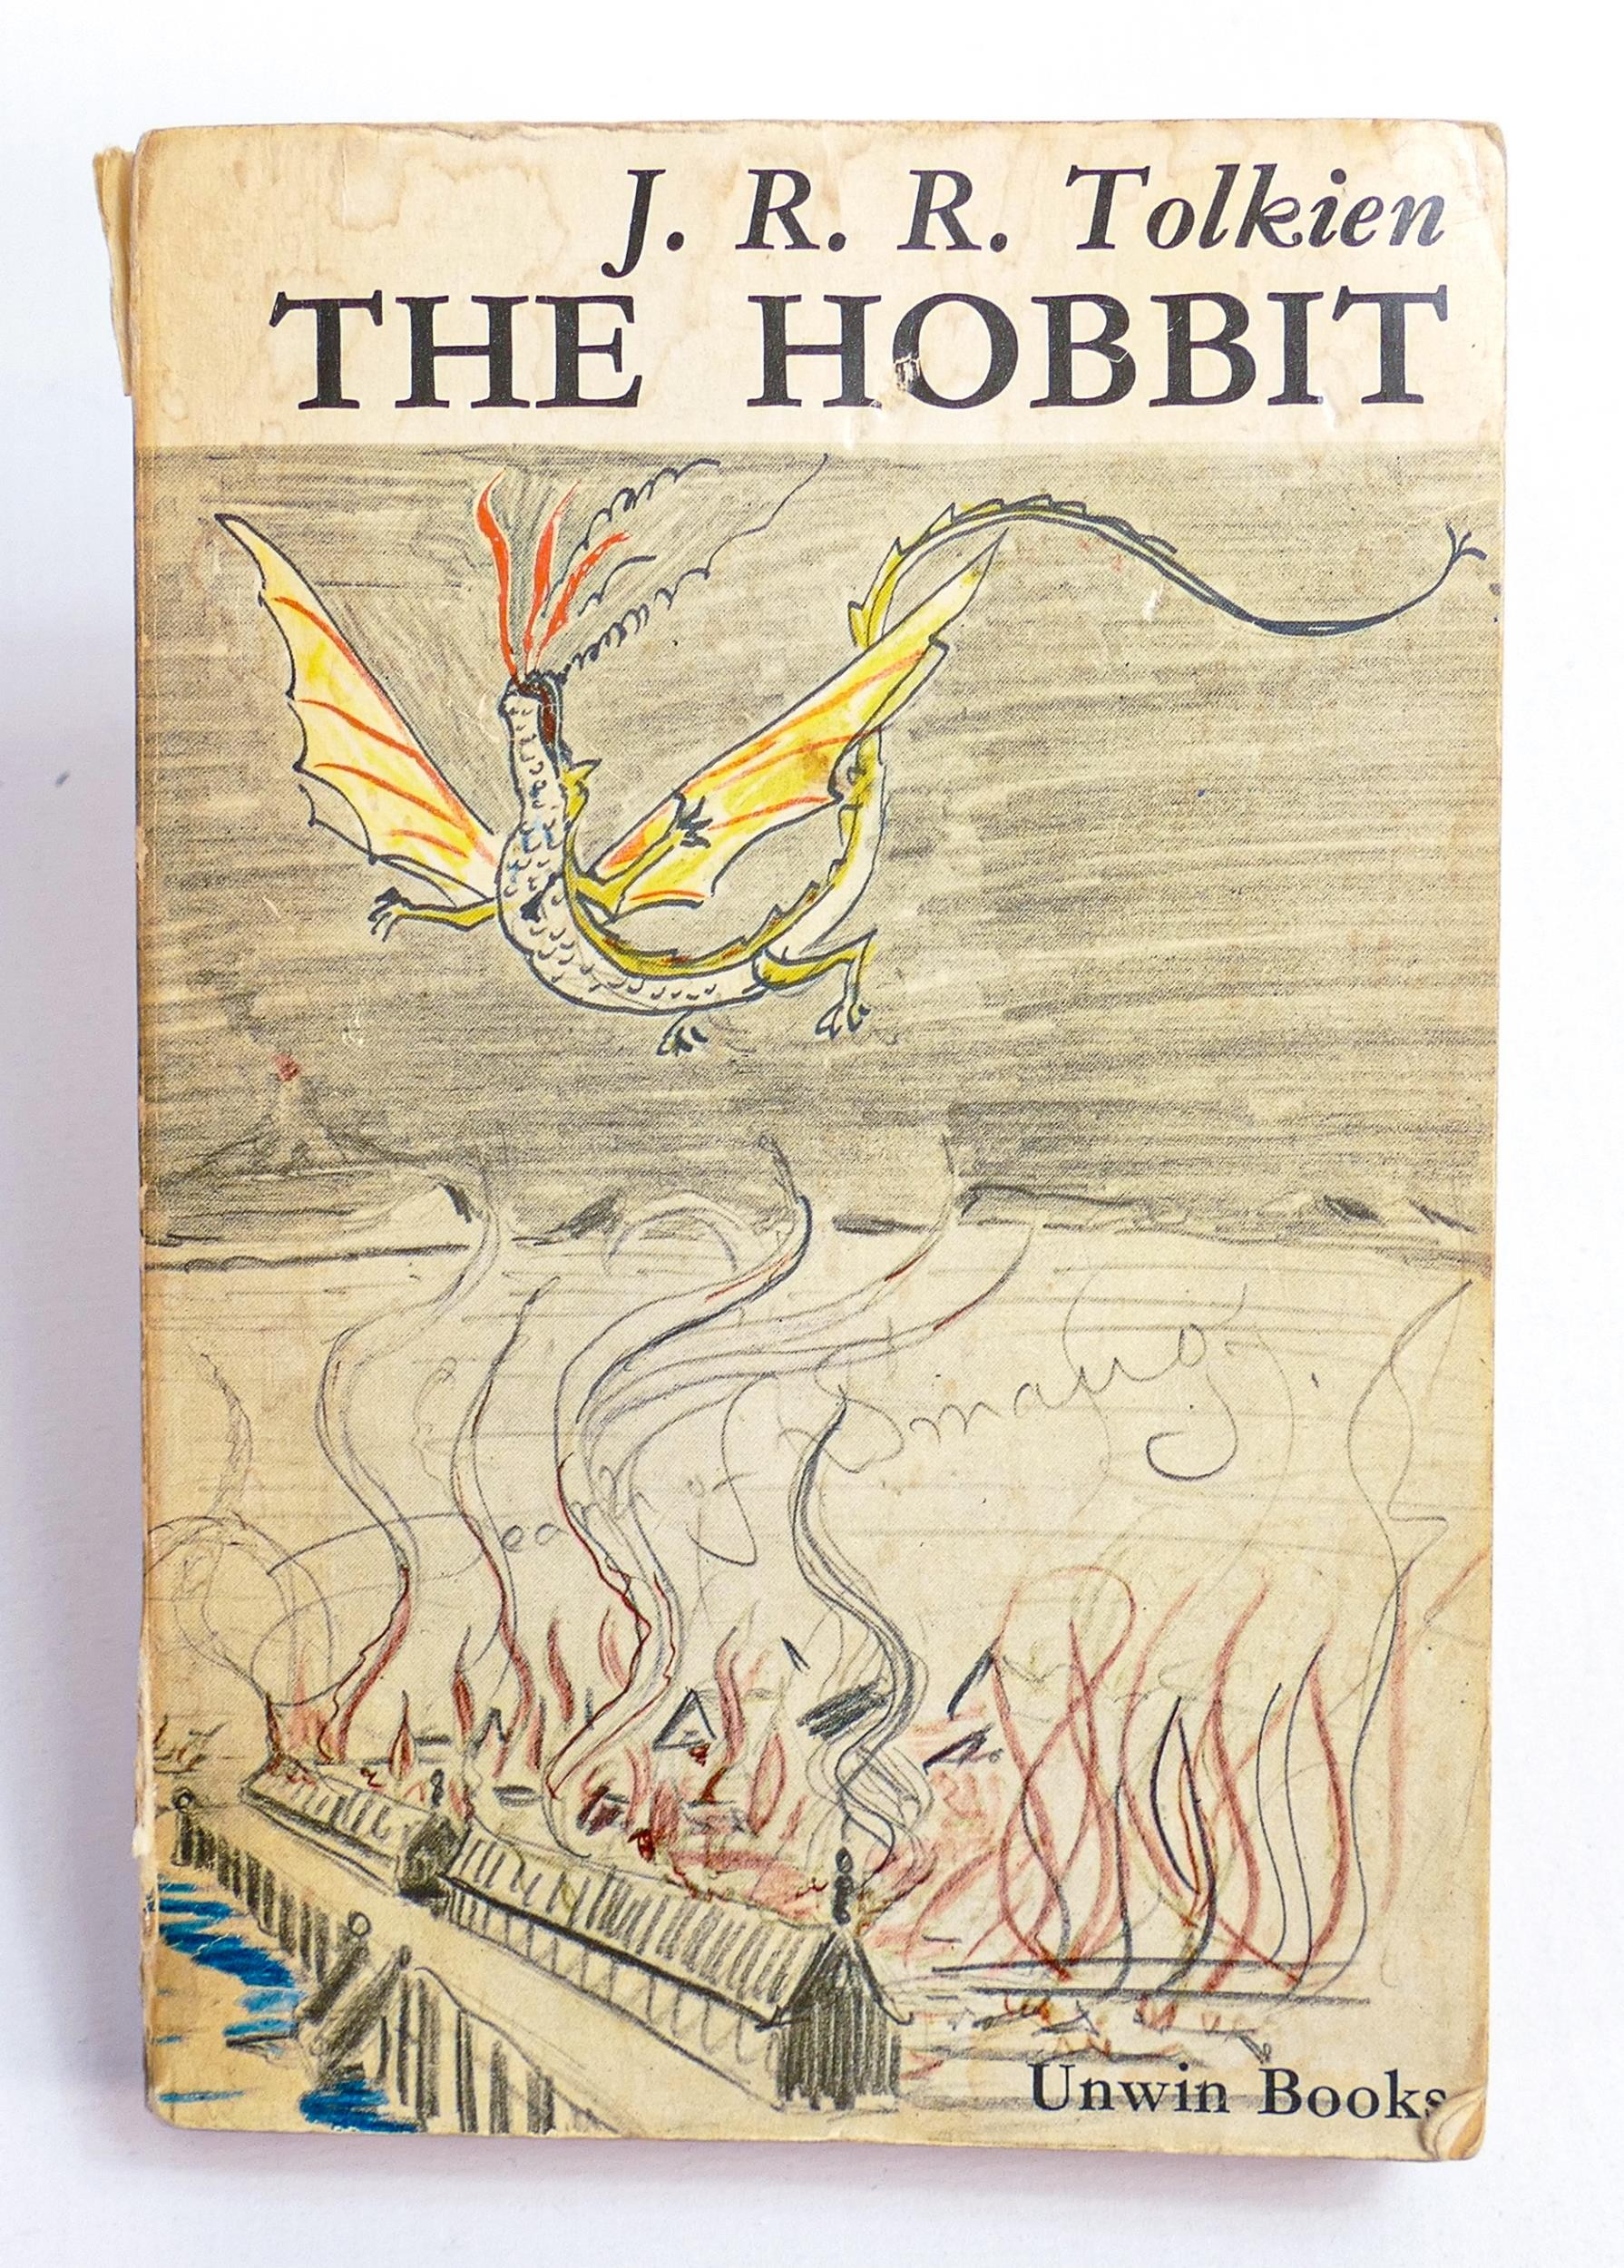 J R R Tolkien signed copy of The Hobbit - Unwin Books Fourteenth Impression 1972 ISBN 0 04823070